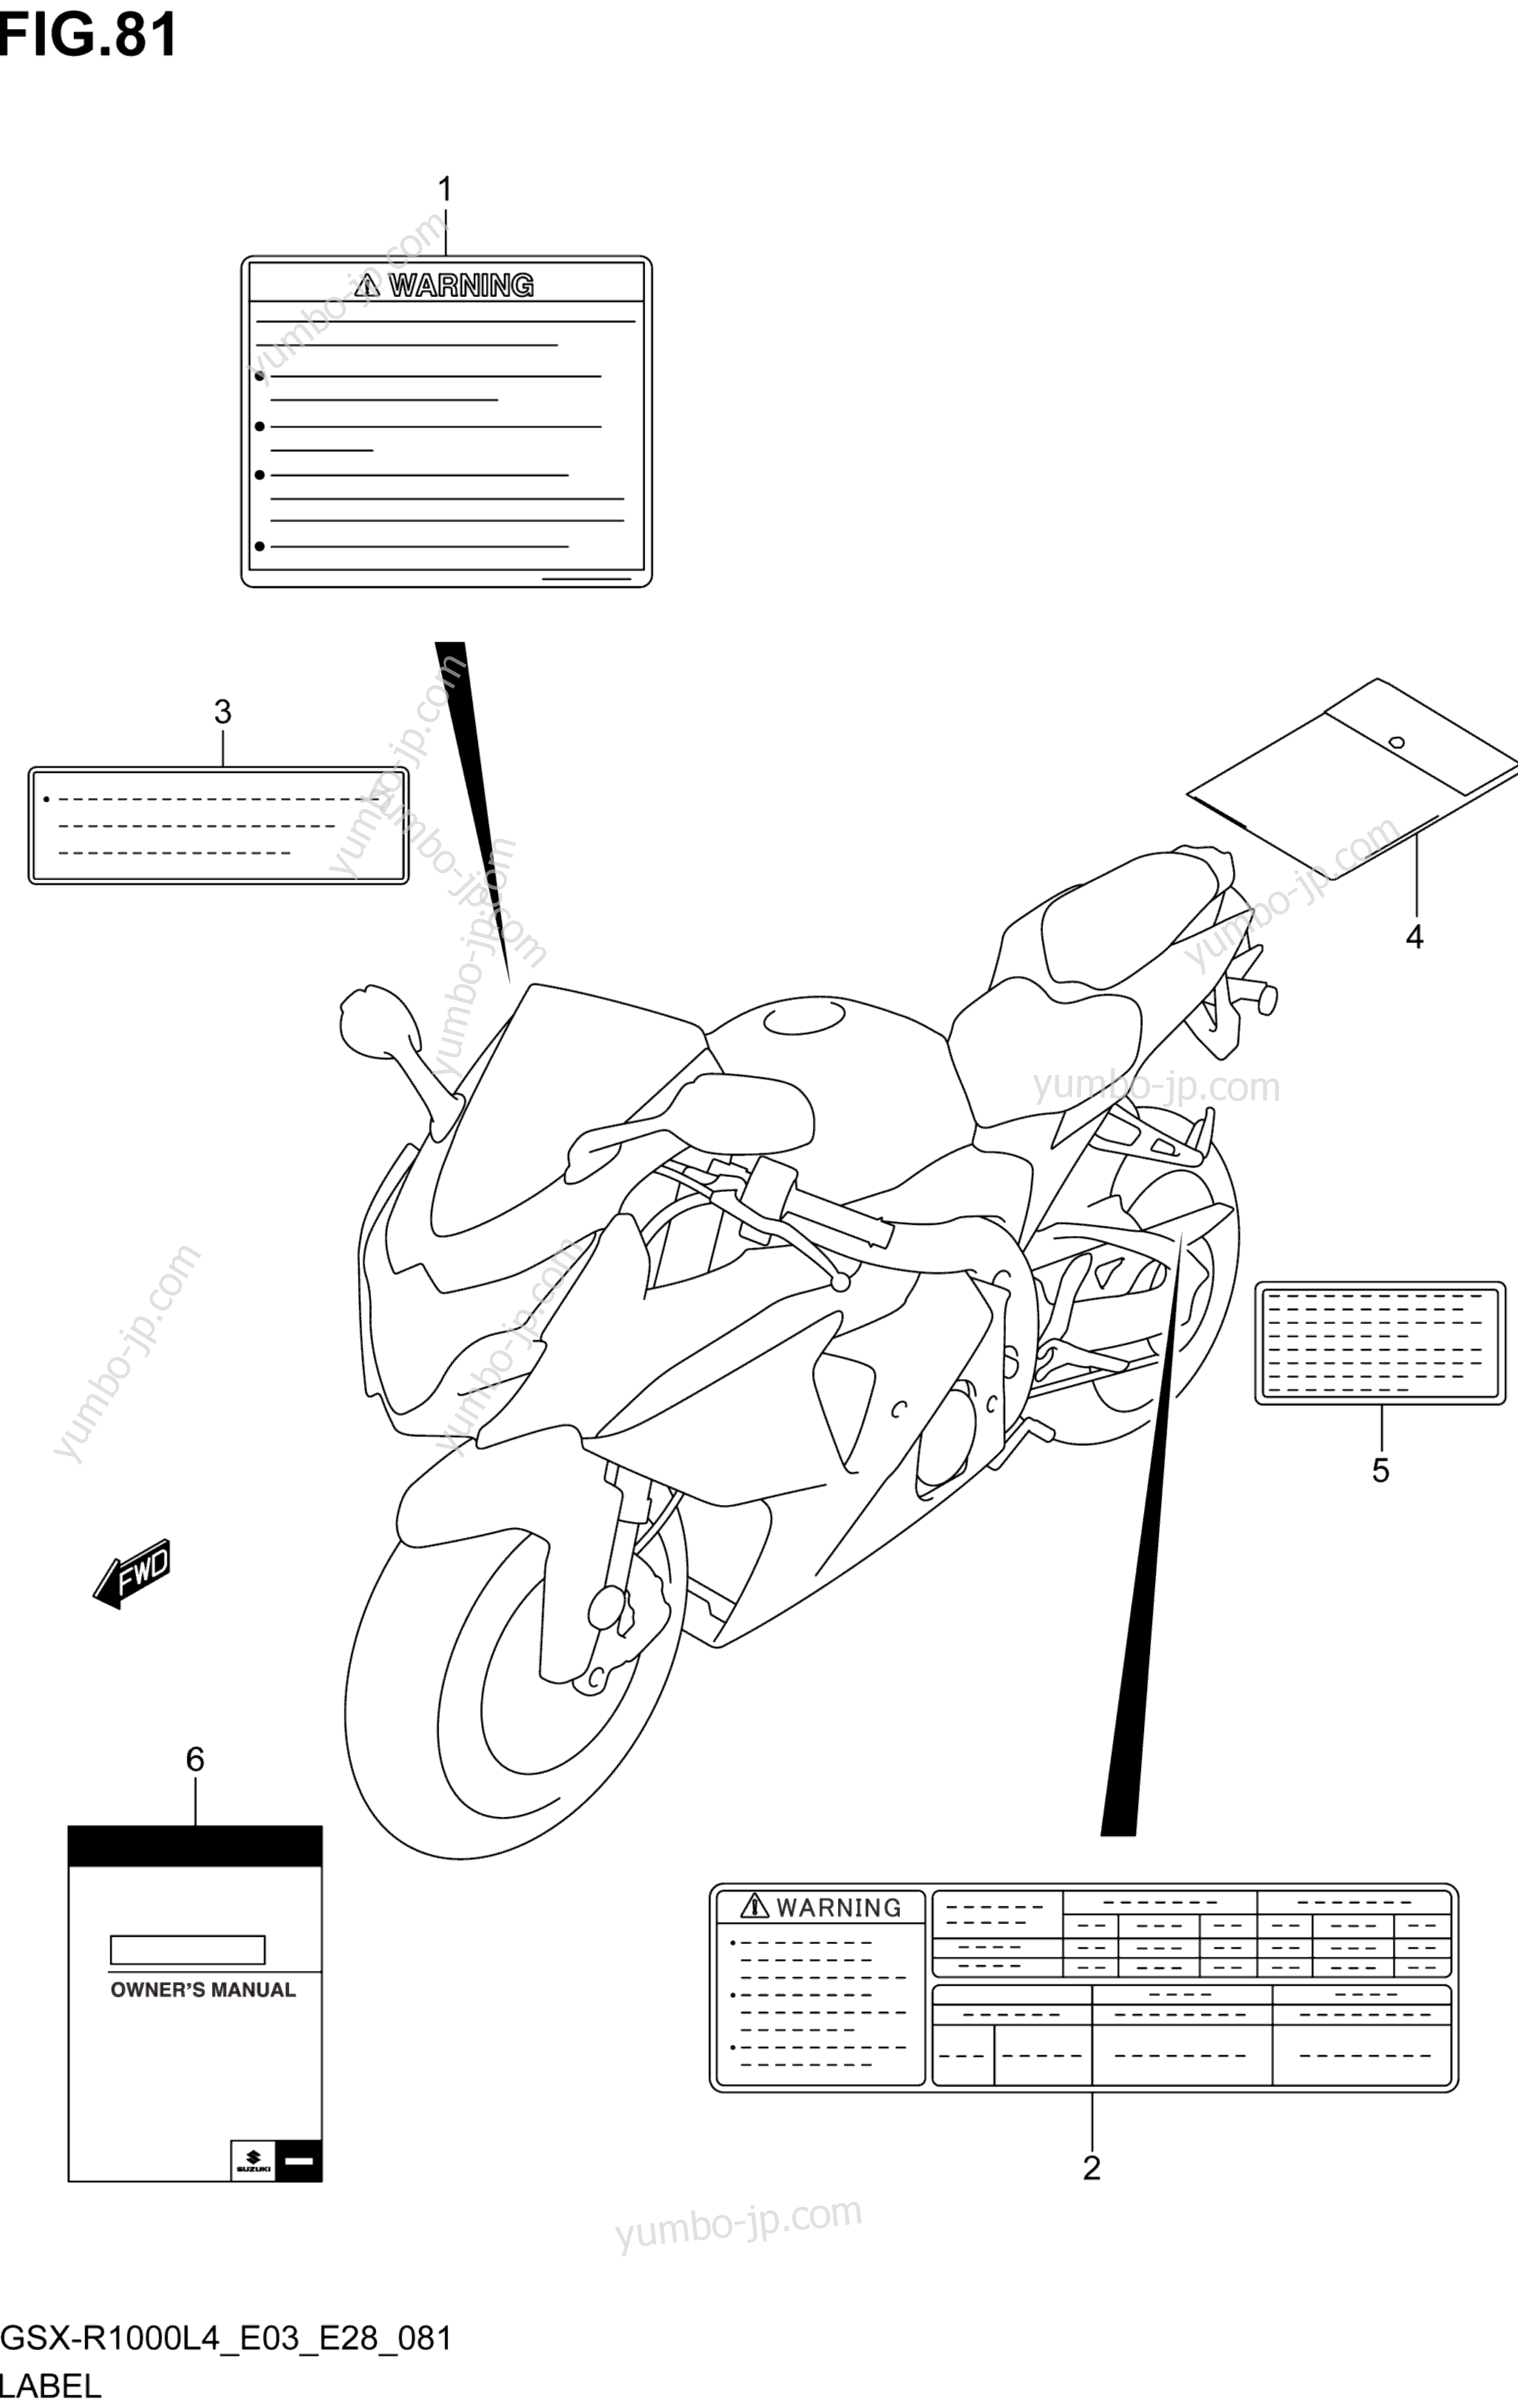 LABEL (GSX-R1000L4 E03) for motorcycles SUZUKI GSX-R1000 2014 year